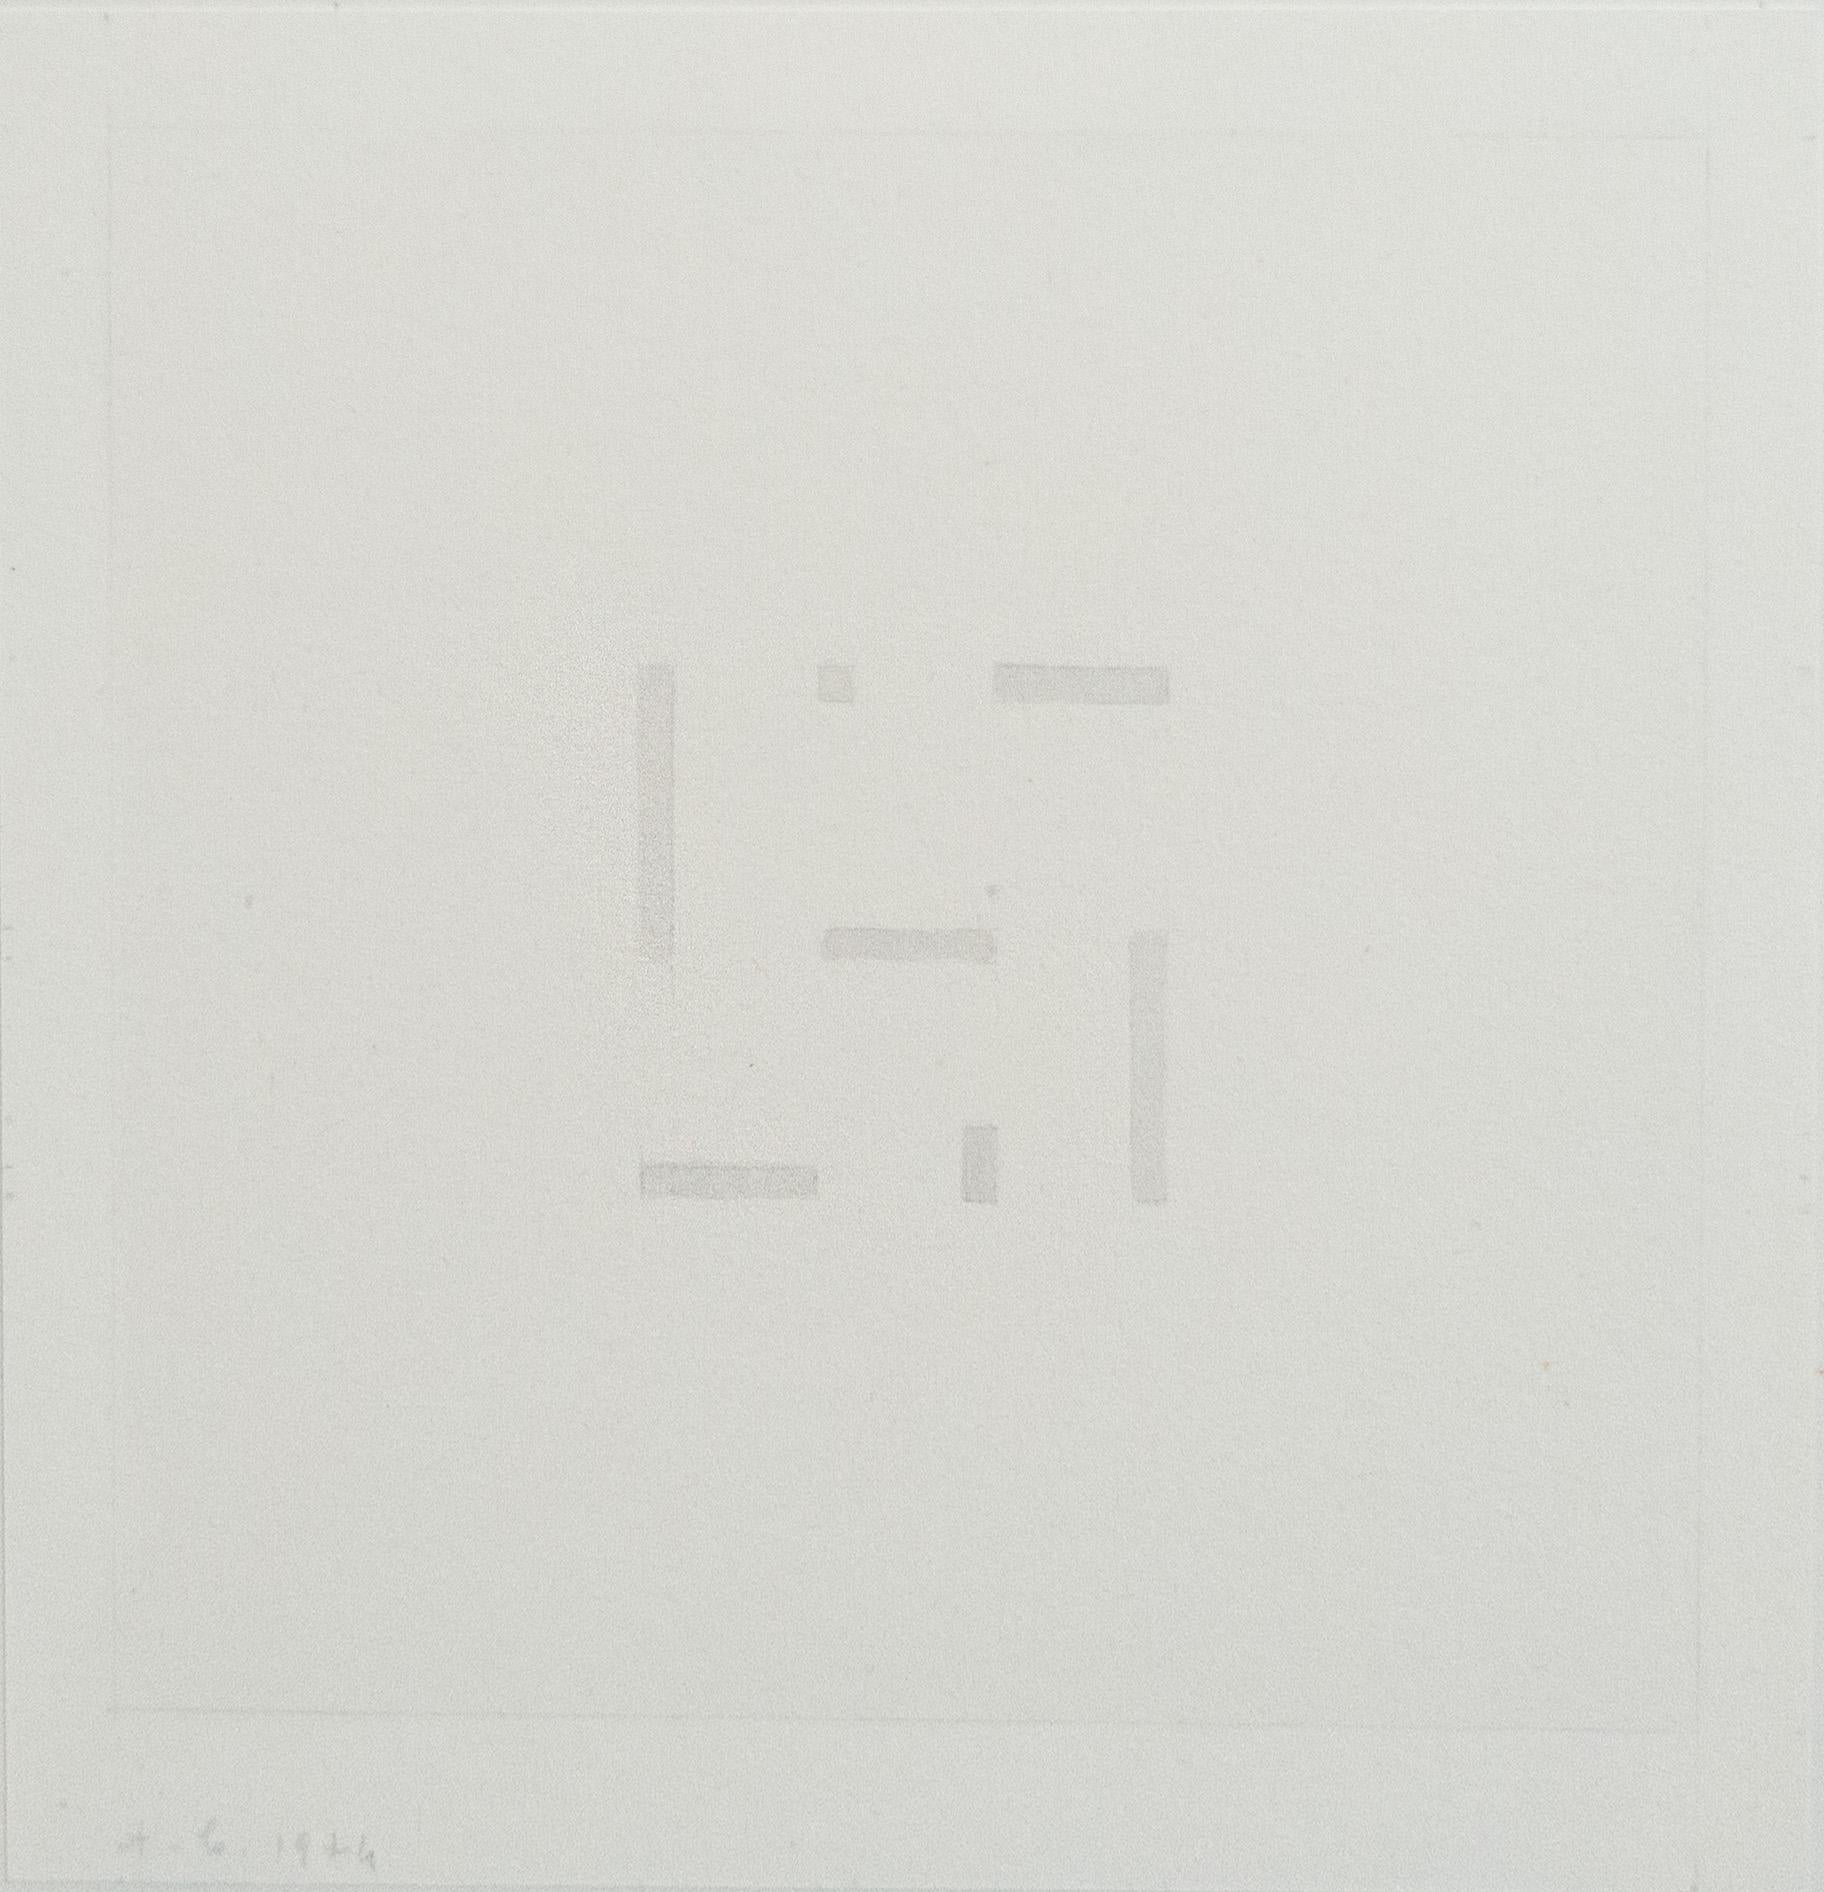 Abstract Drawing Antonio Calderara - Constellation grise A, abstraction, art italien, minimalisme 1974